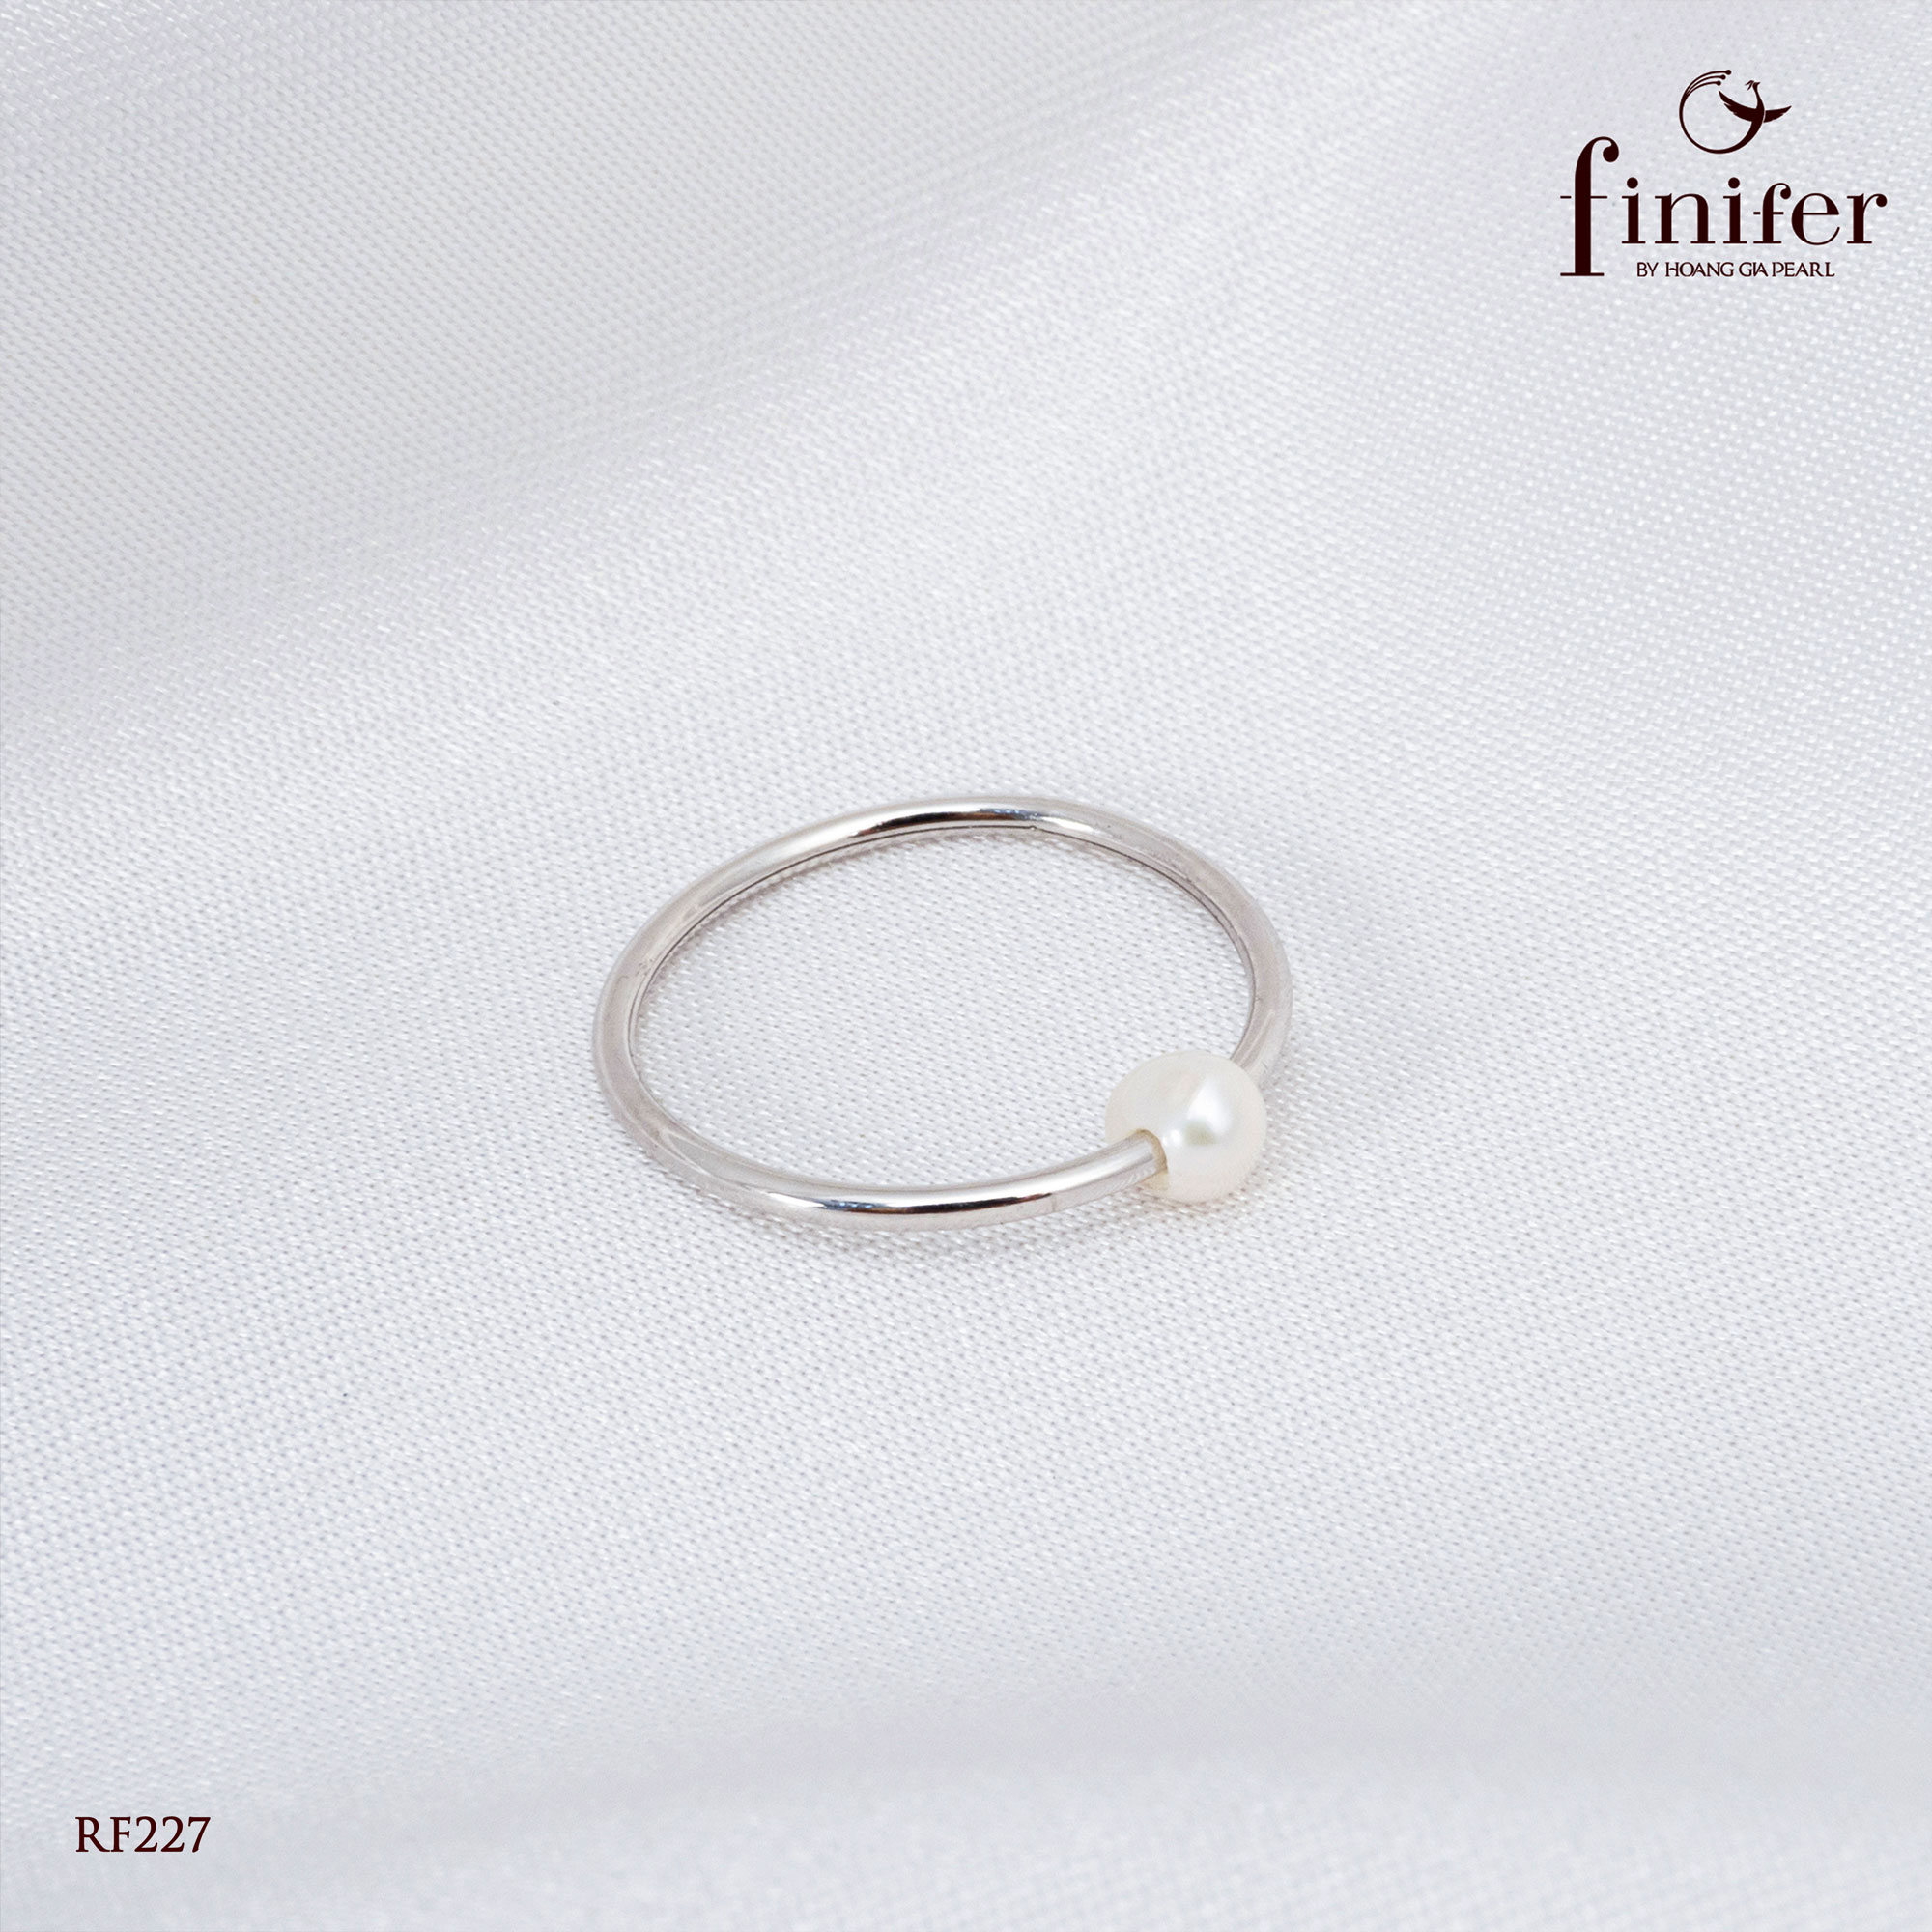 Nhẫn ngọc trai RF227 Finifer (L)